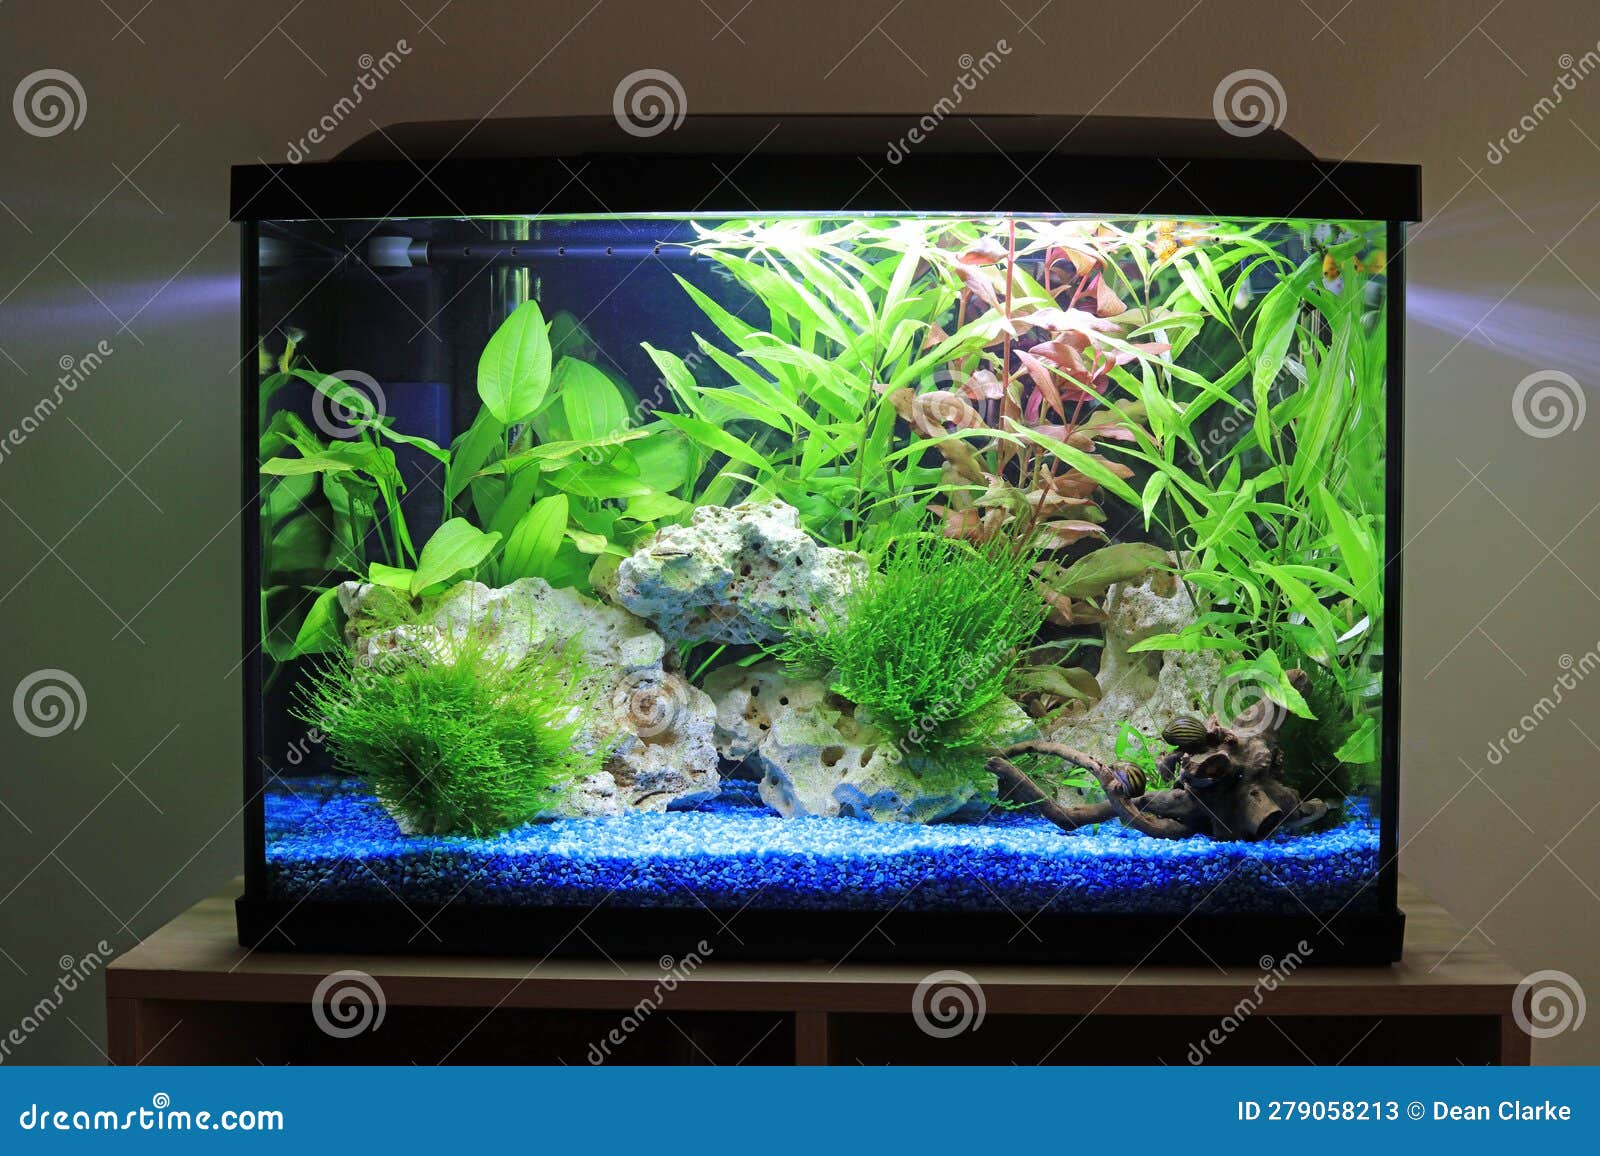 A home fish tank aquarium stock image. Image of hobbies - 279058213